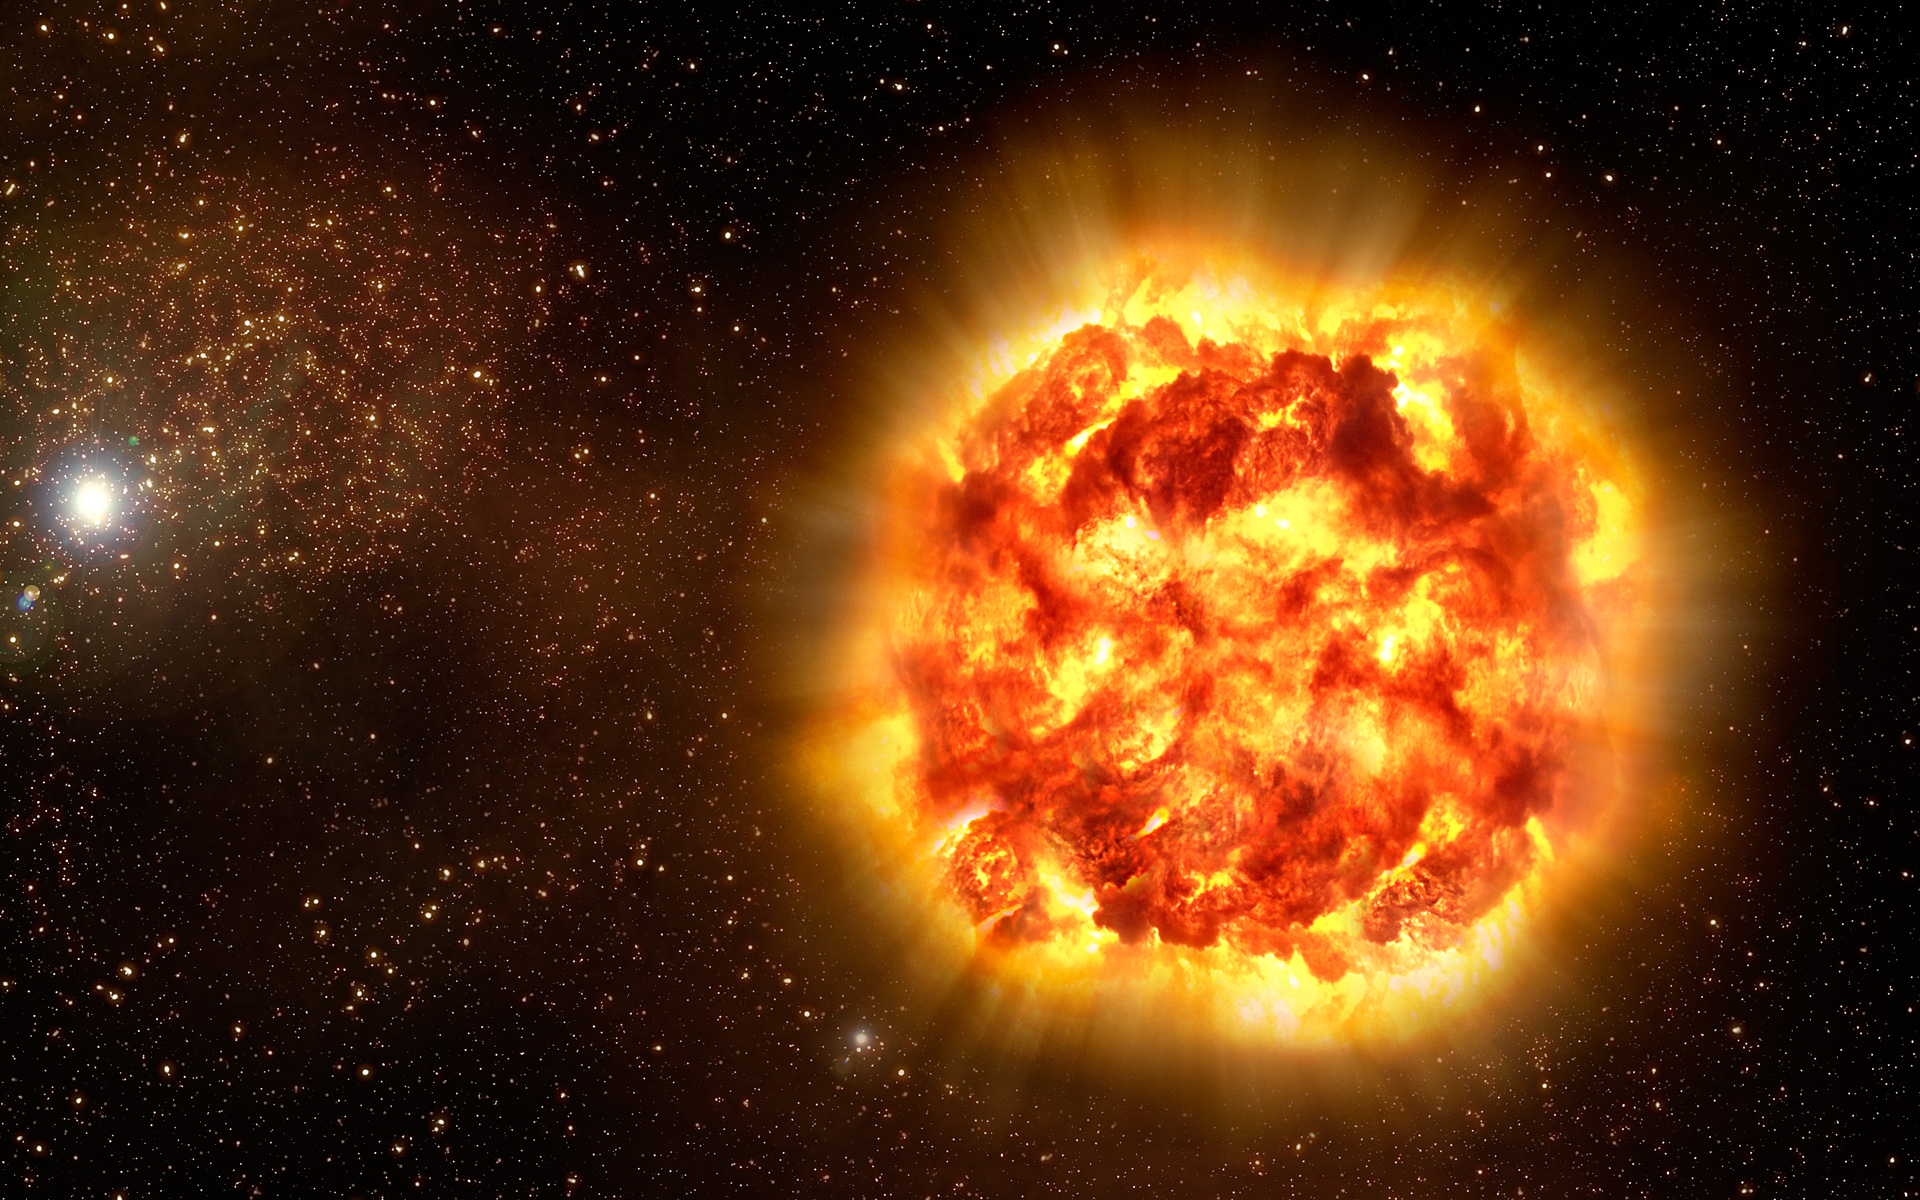 Une vue d'artiste de la supernova SN 2013fs. © ESO